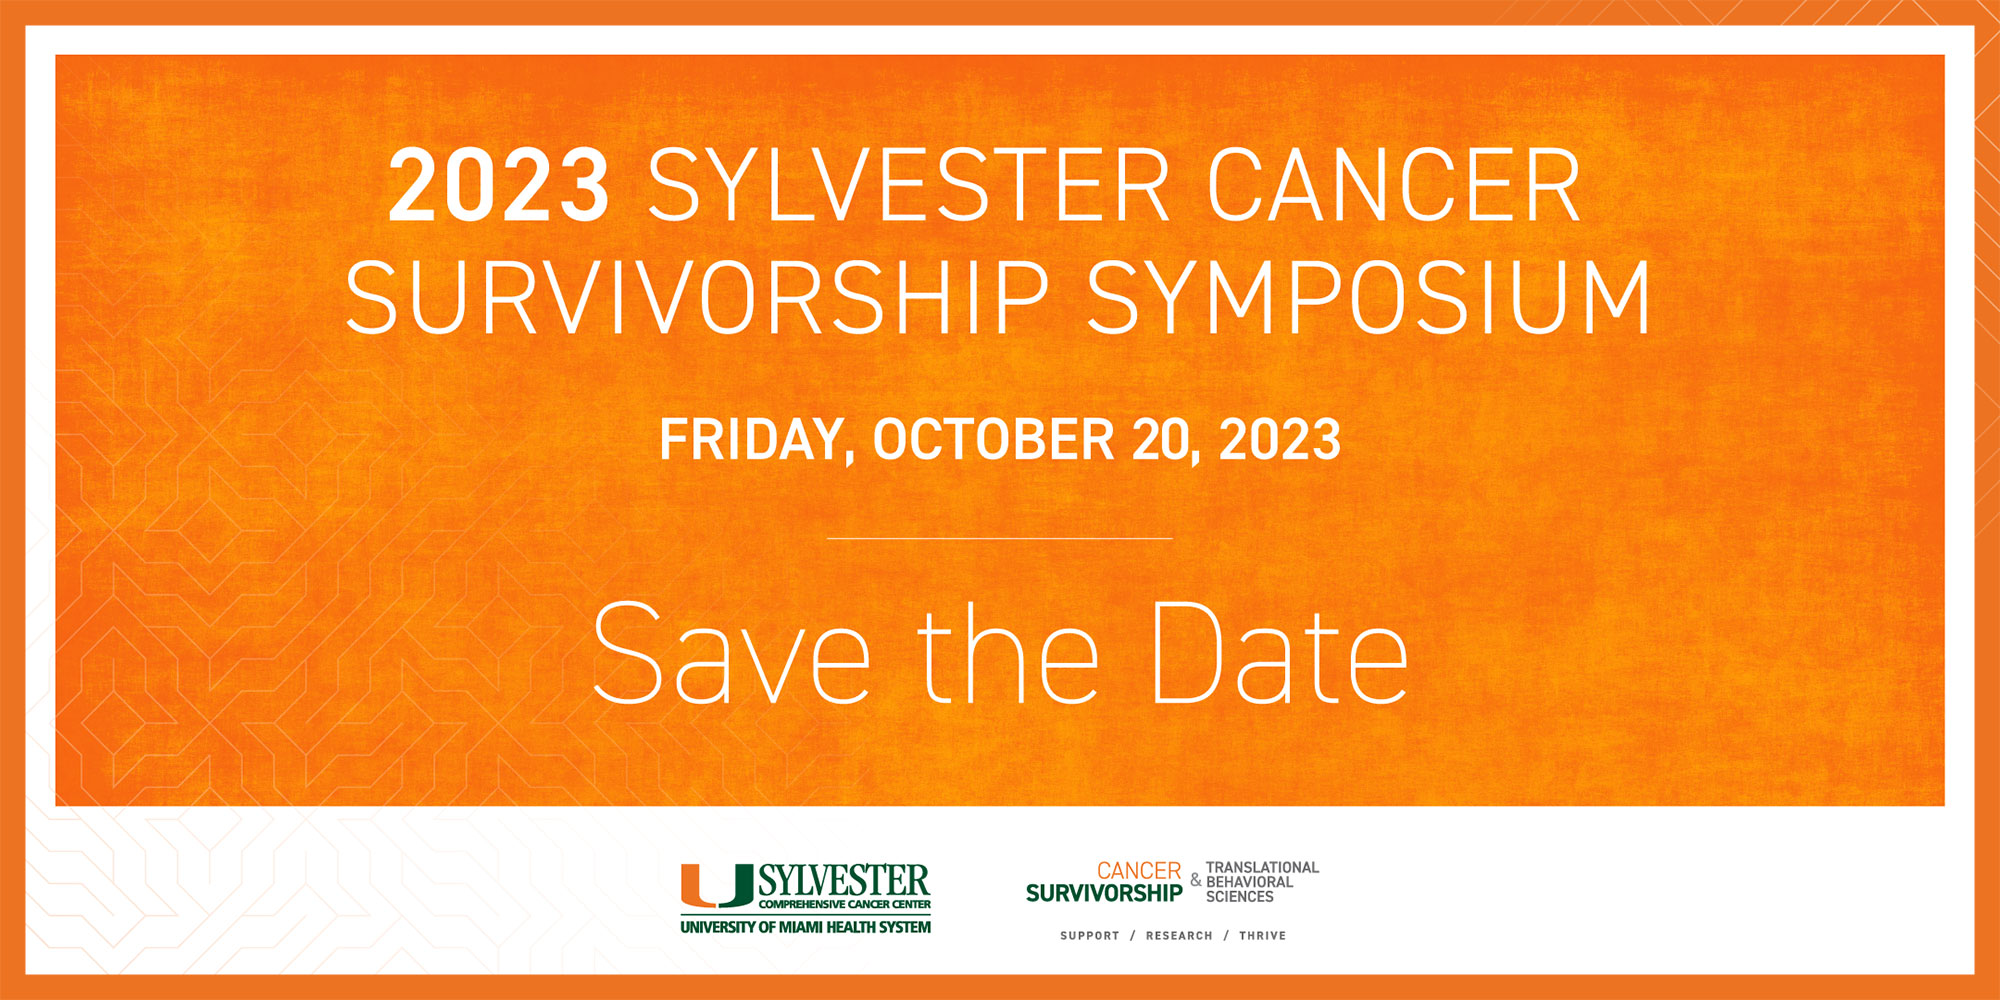 2023 Sylvester Cancer Survivorship Symposium Save the Date